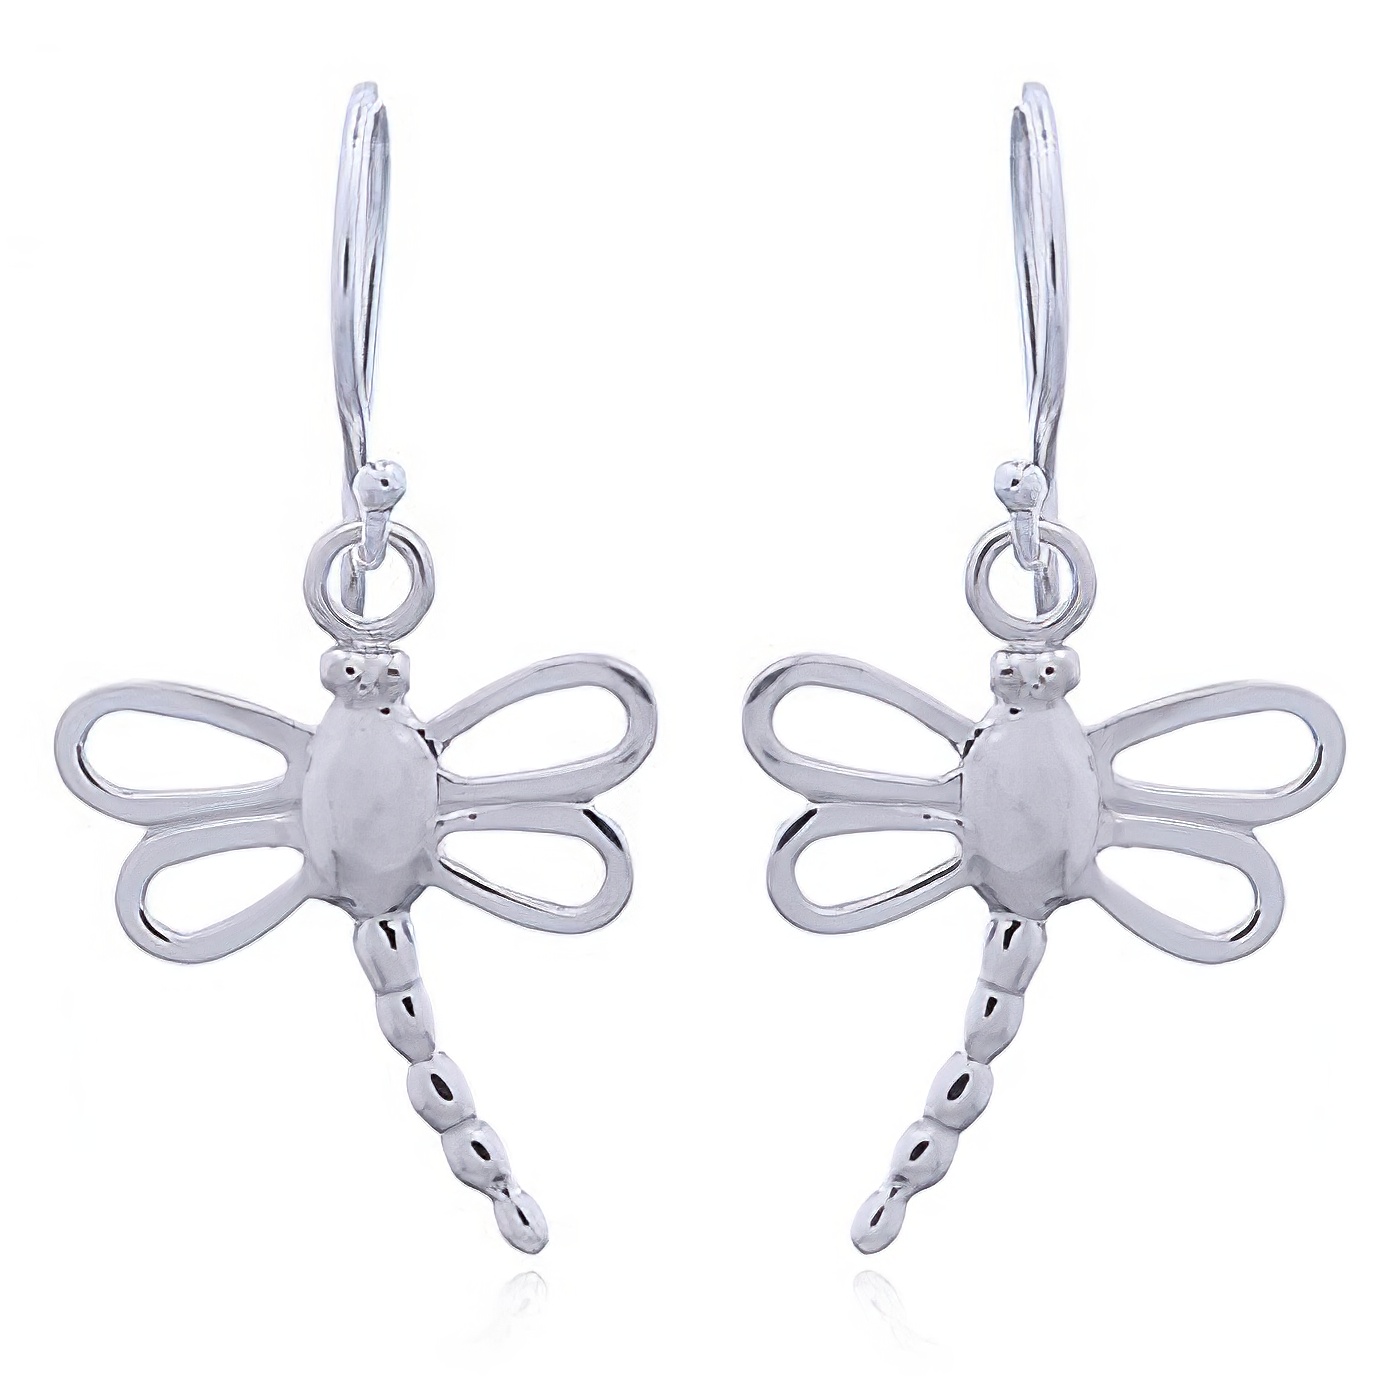 Cute Sterling Silver Dragonfly Dangle Earrings by BeYindi 